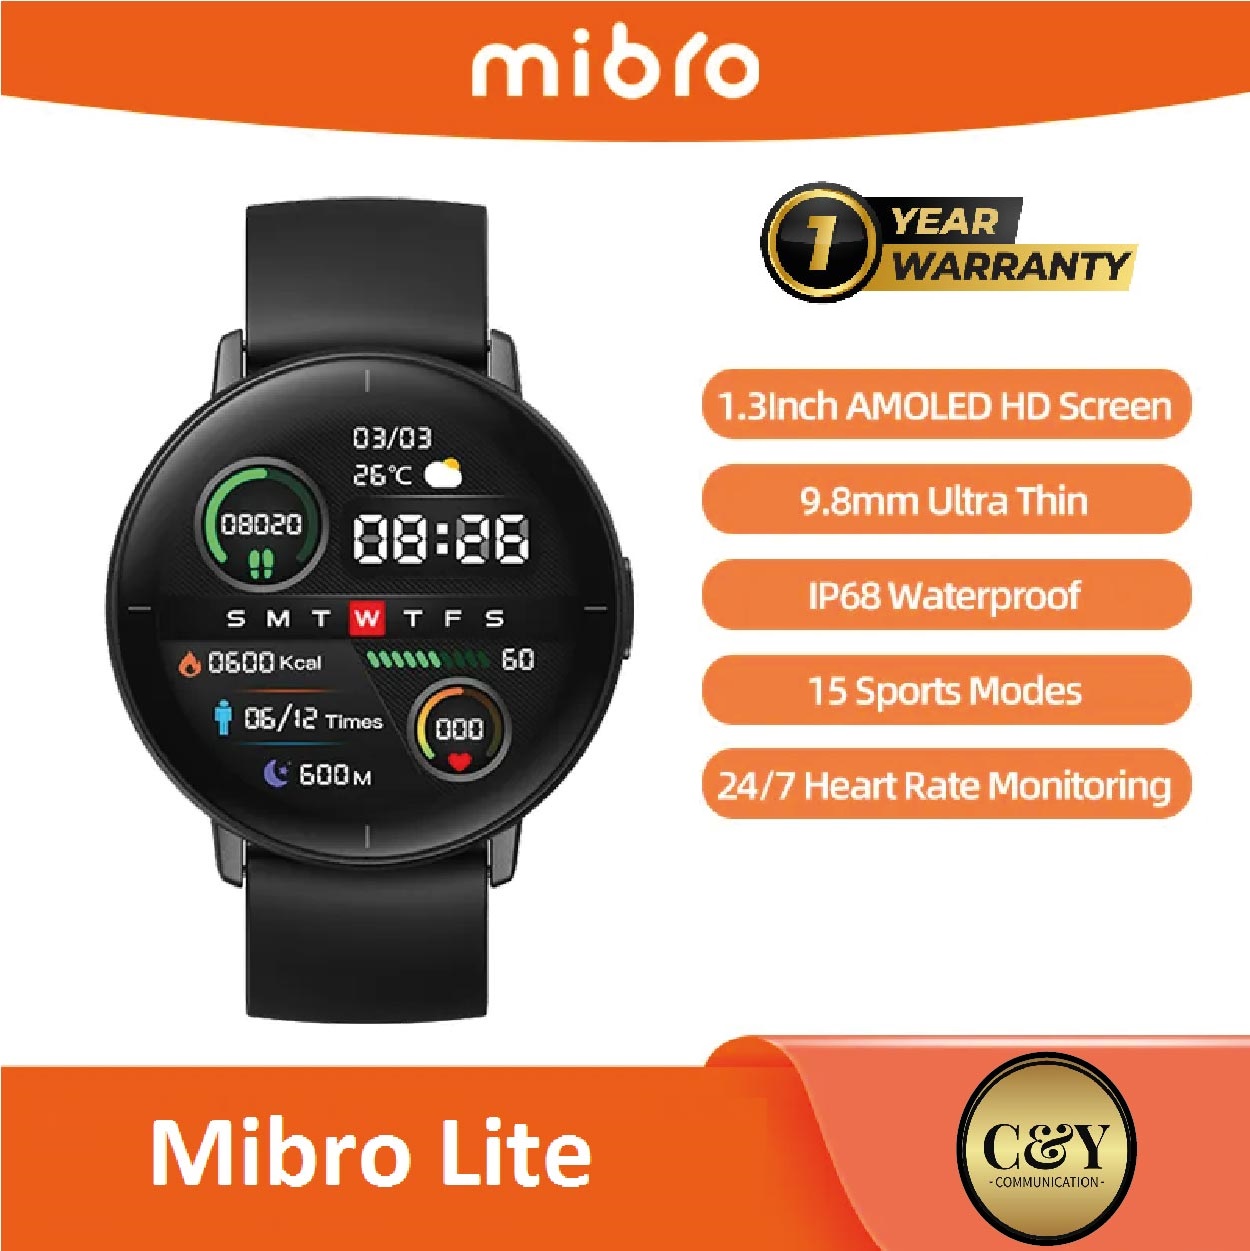 Mibro Lite Smartwatch Global Version 1.3Inch AMOLED HD Display IP68 Waterproof App Control Fitness Monitoring Bluetooth Watch